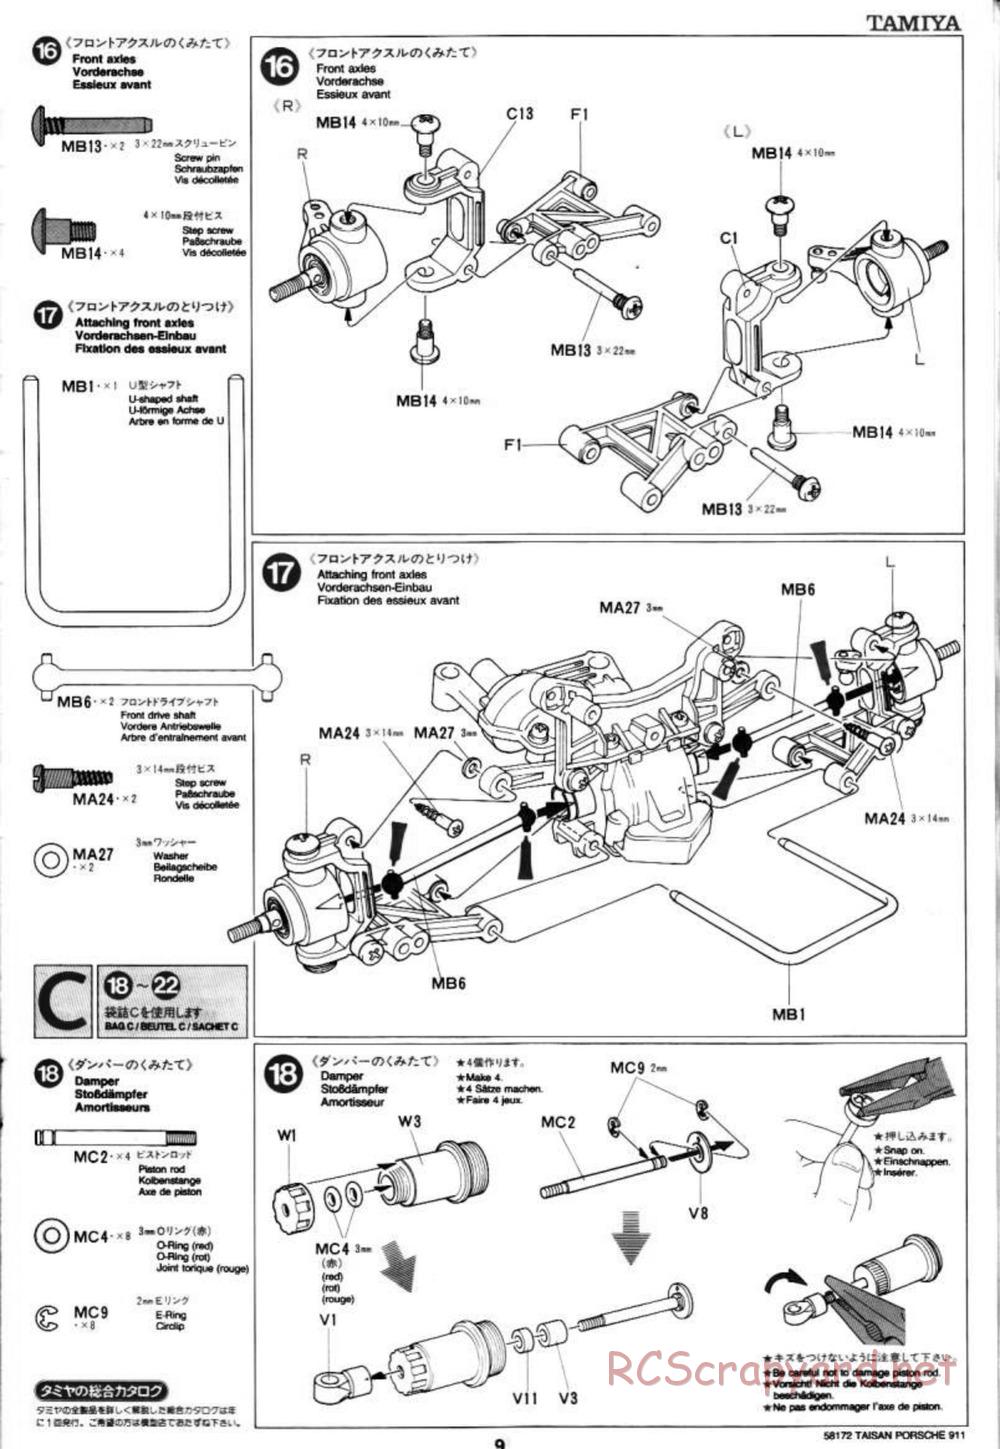 Tamiya - Taisan Starcard Porsche 911 GT2 - TA-02SW Chassis - Manual - Page 9